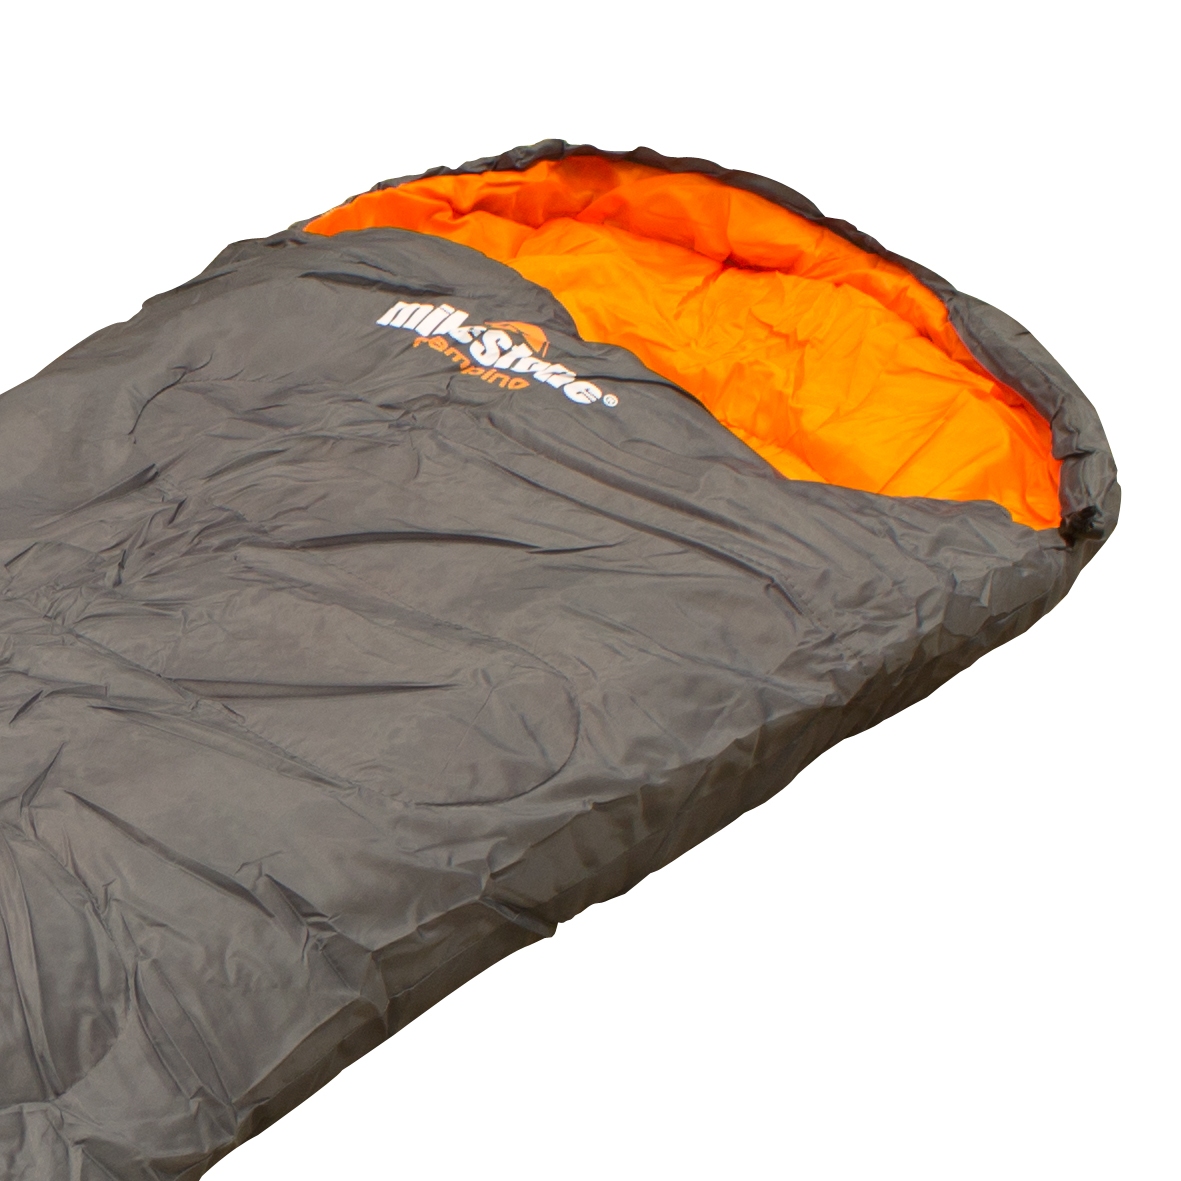 2 Season Adult Envelope Mummy 150 Sleeping Bag Suit Case Extreme Camping Hiking 